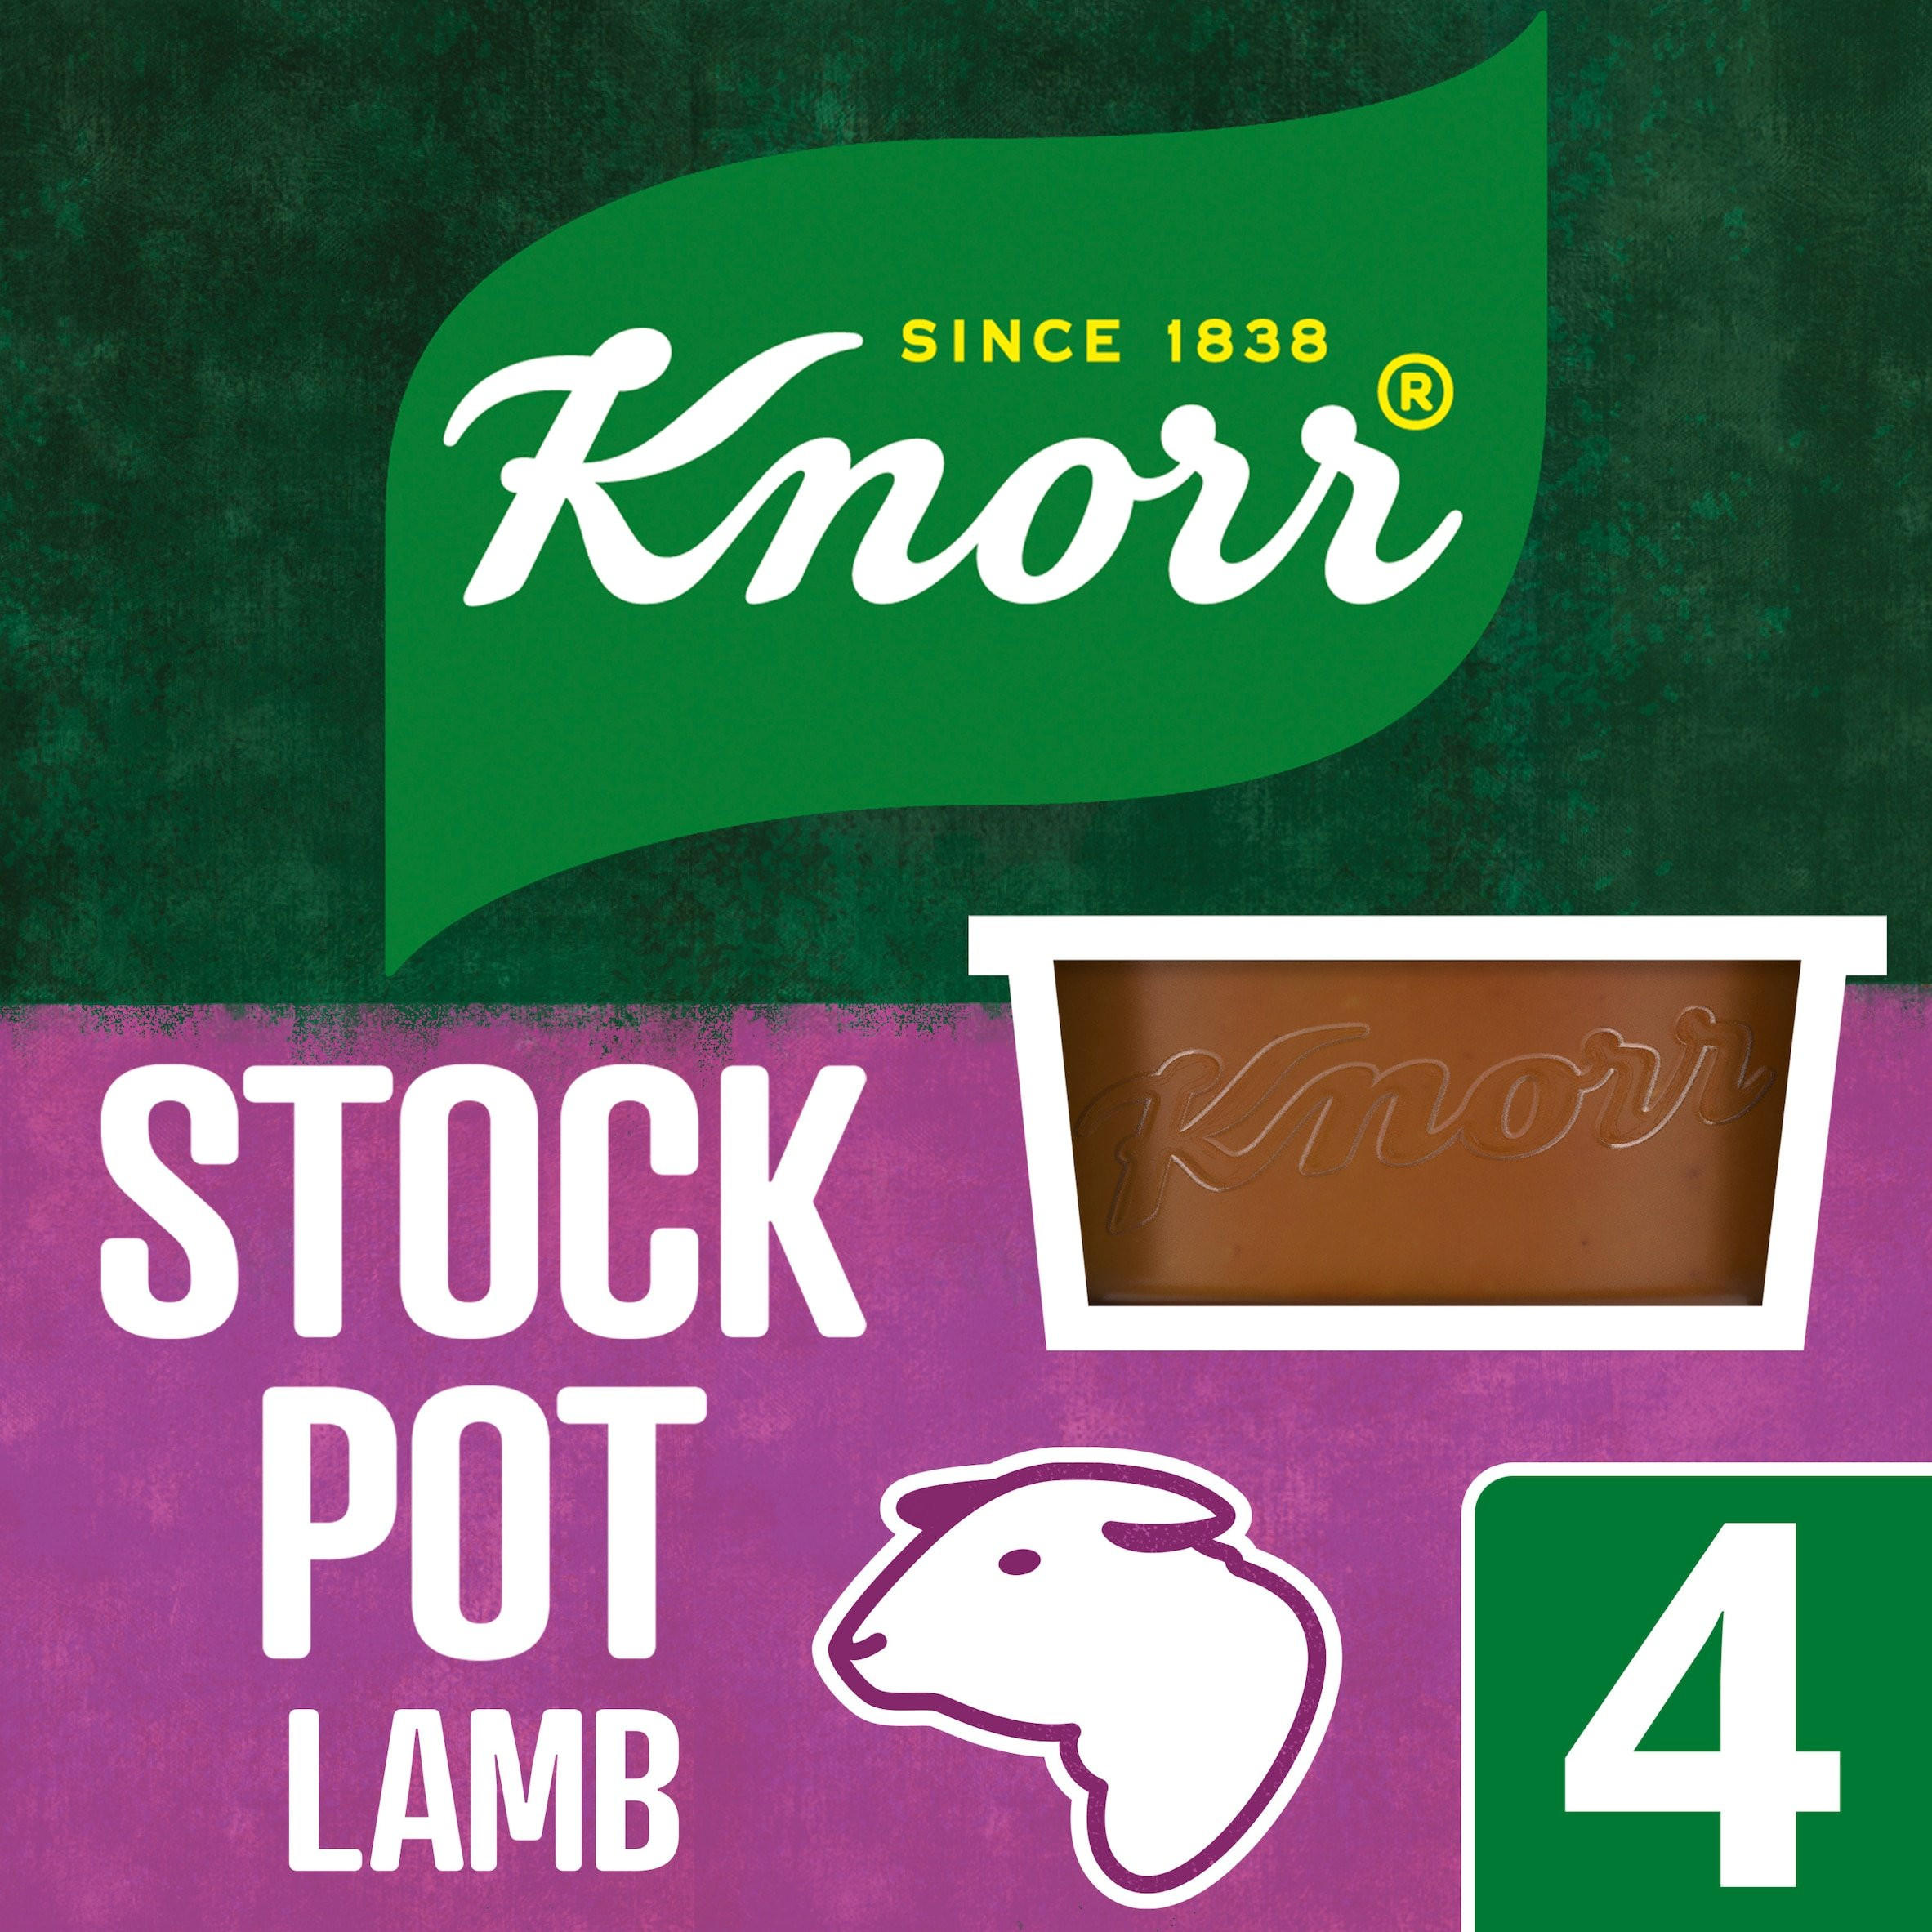 Knorr logo Stock Photos, Royalty Free Knorr logo Images | Depositphotos